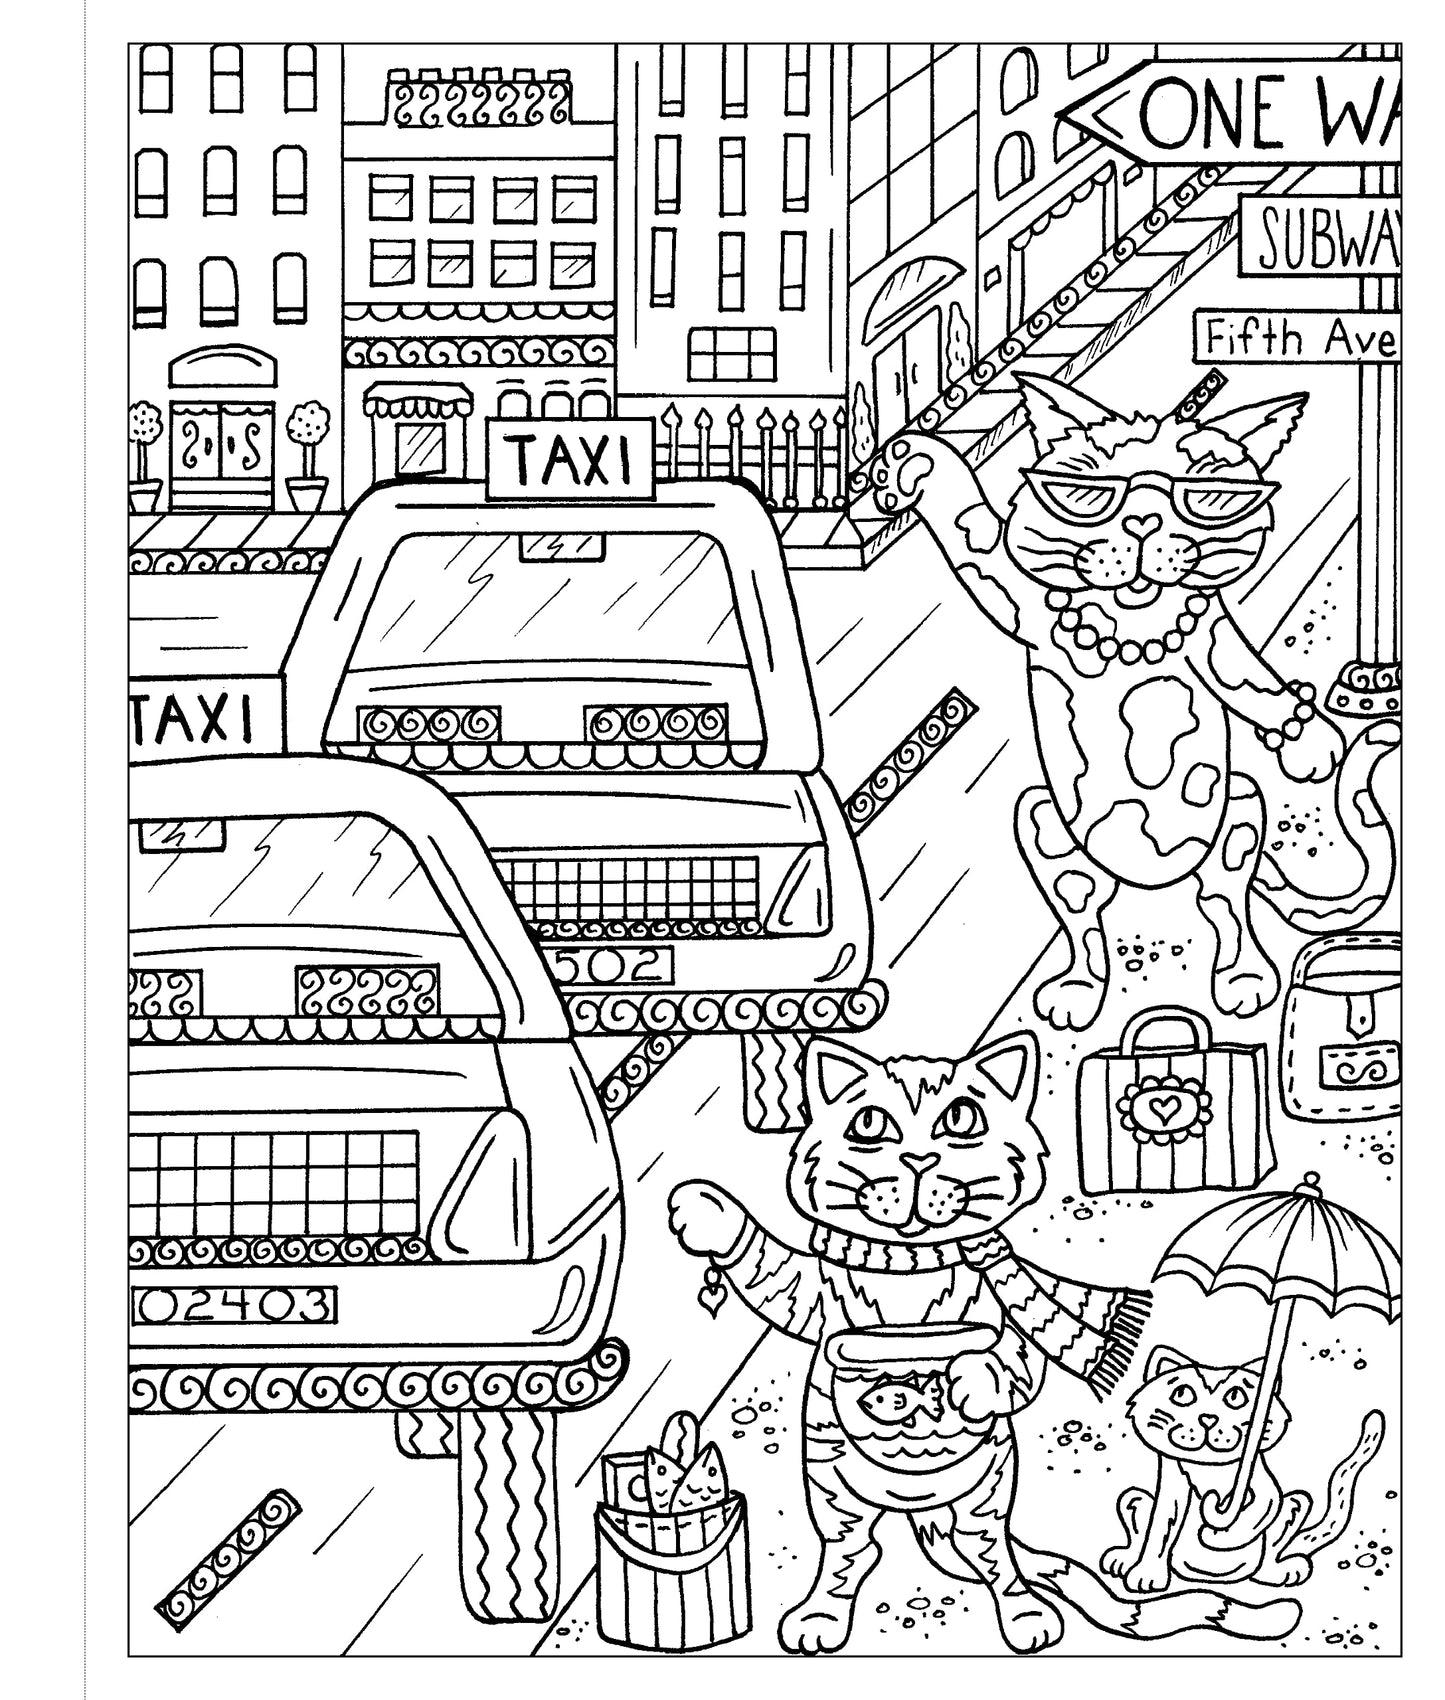 Kitties in Cities Coloring Book